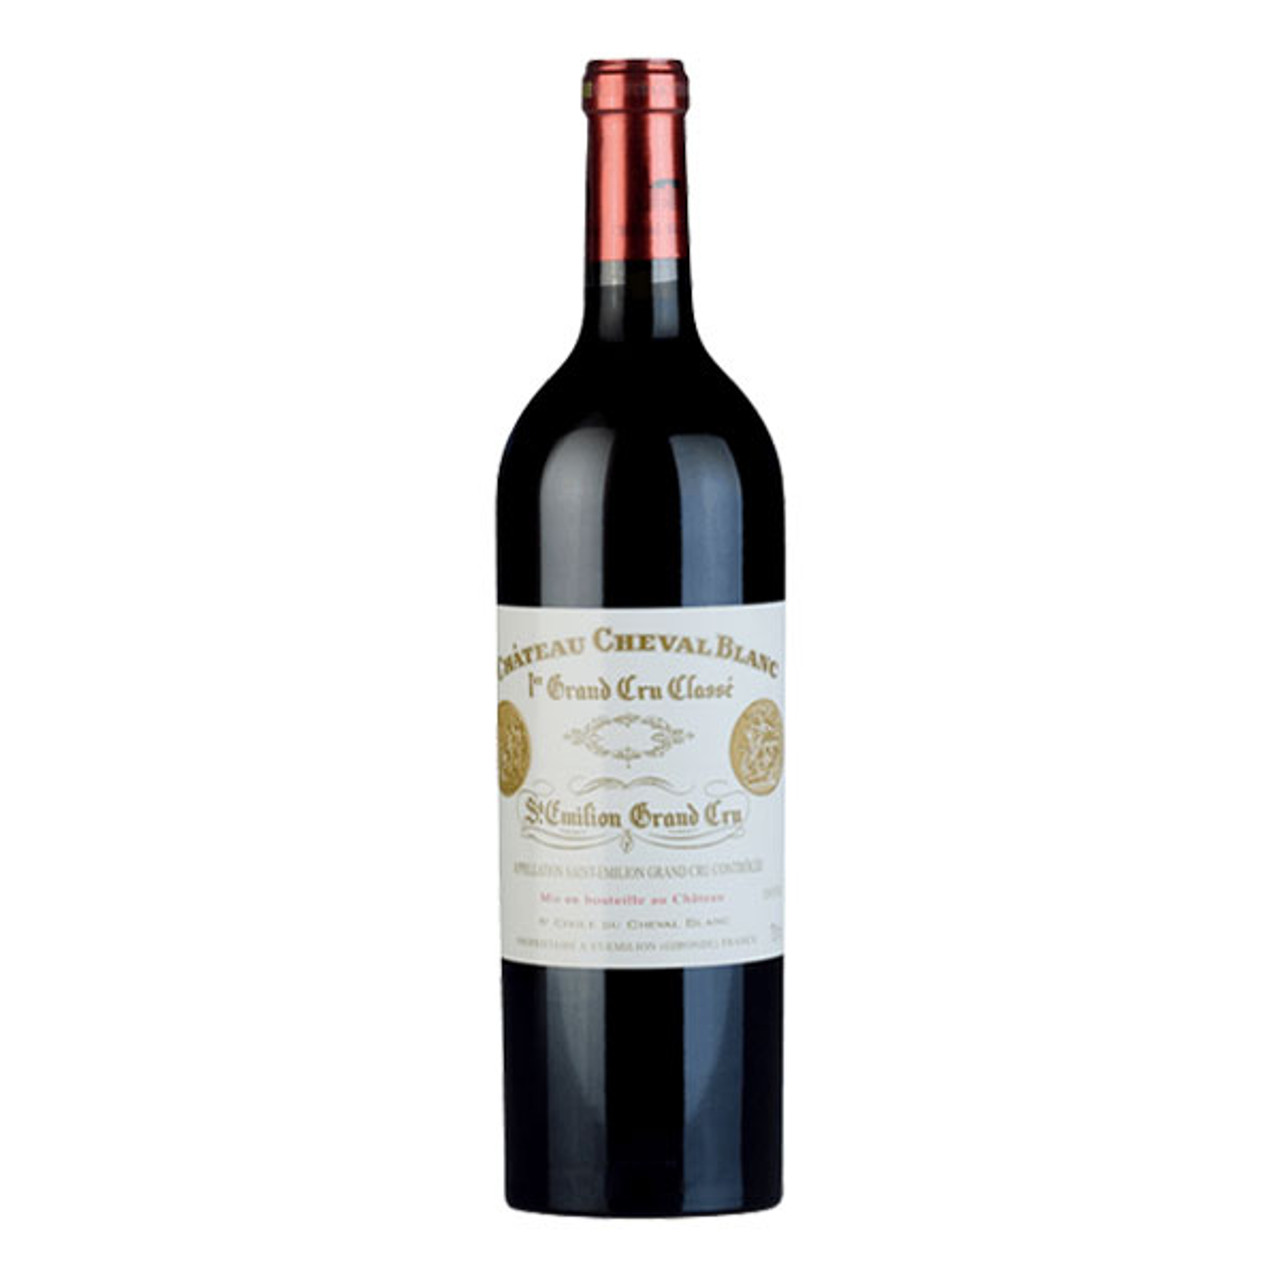 2000 Chateau Cheval Blanc, Saint-Emilion 750mL